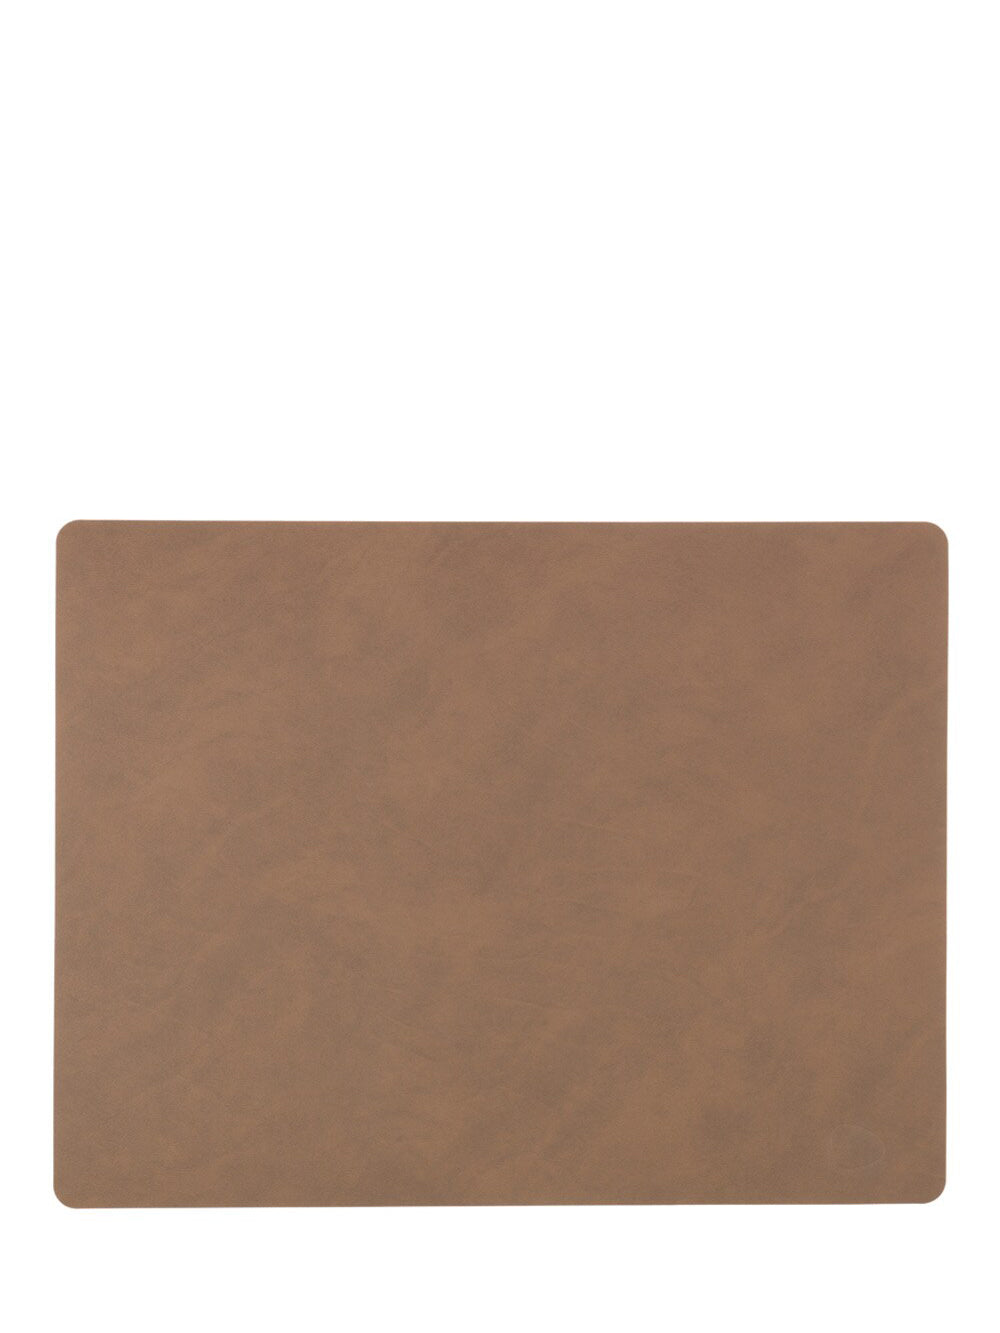 Leather Table Mat Square, cognac